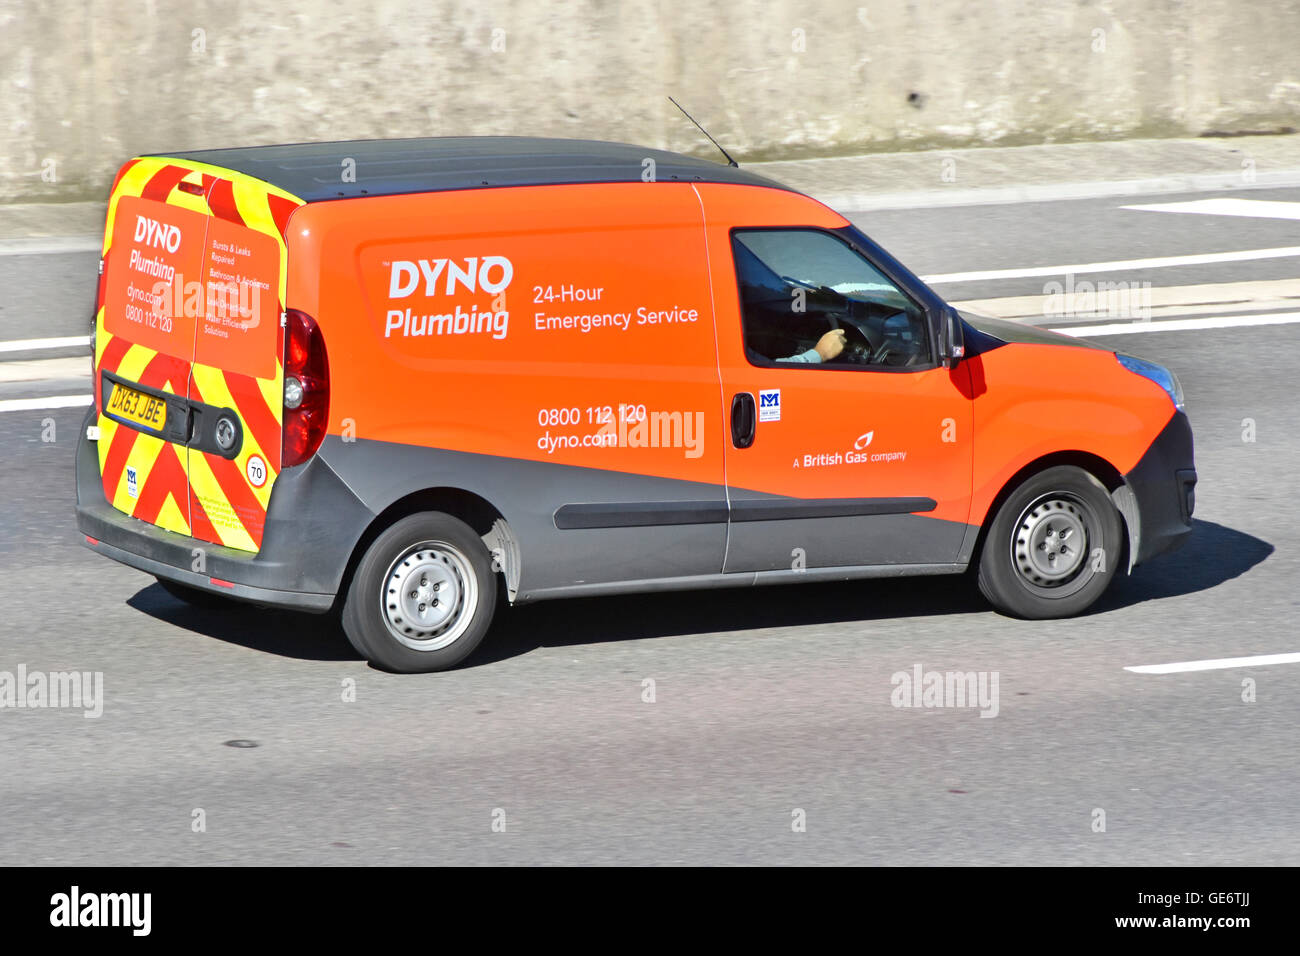 British Gas Dyno Plumbing 24 hour emergency service van driving along M25 motorway Essex England UK Stock Photo